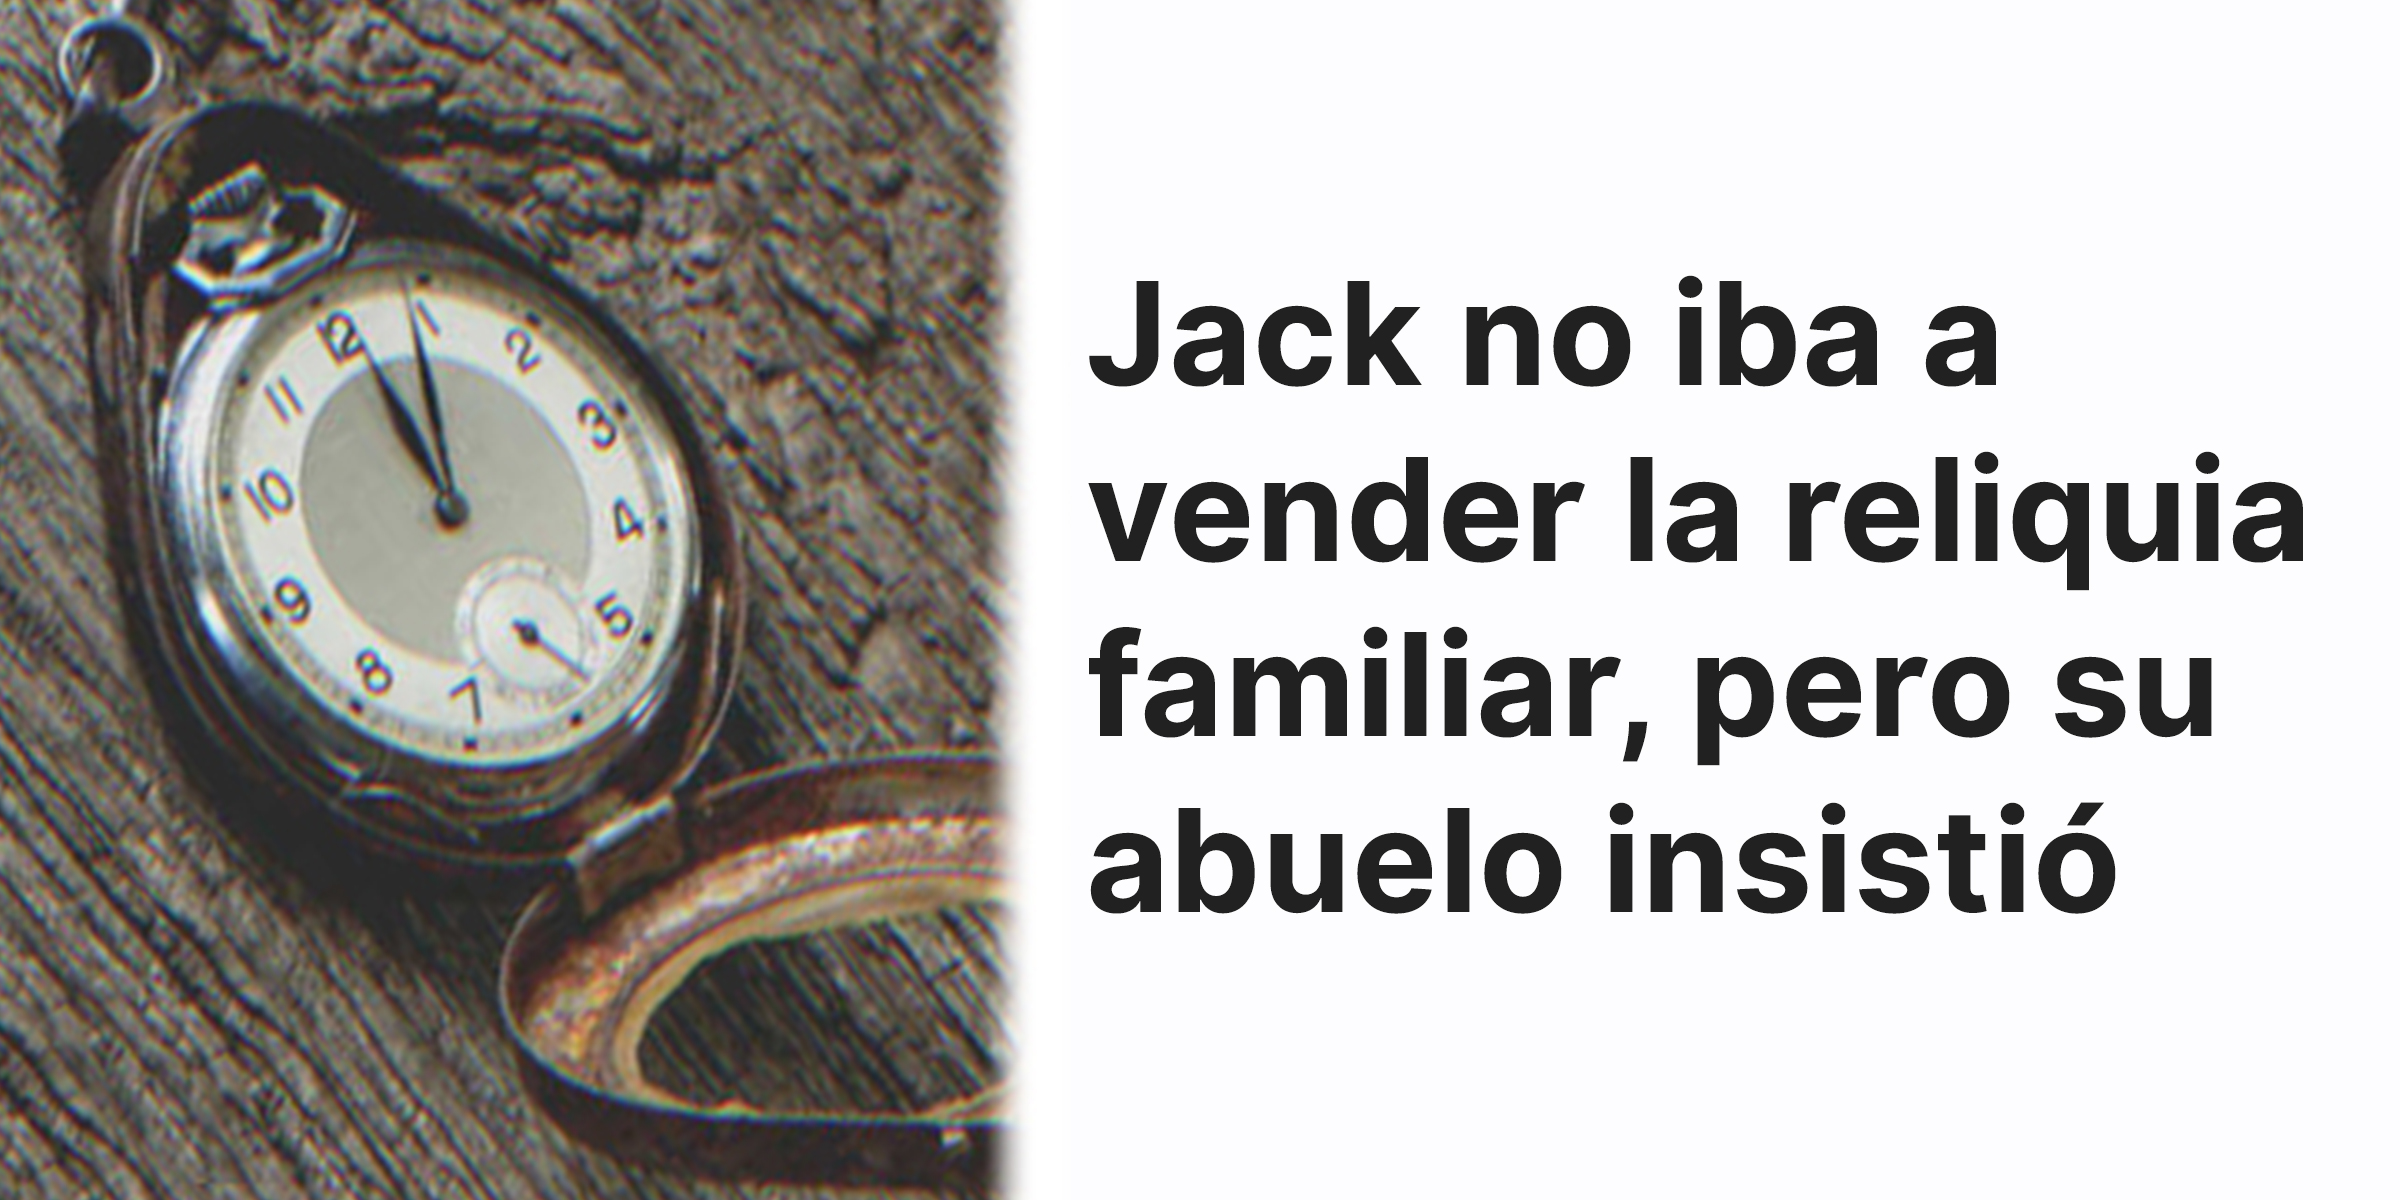 Reloj antiguo | Shutterstock